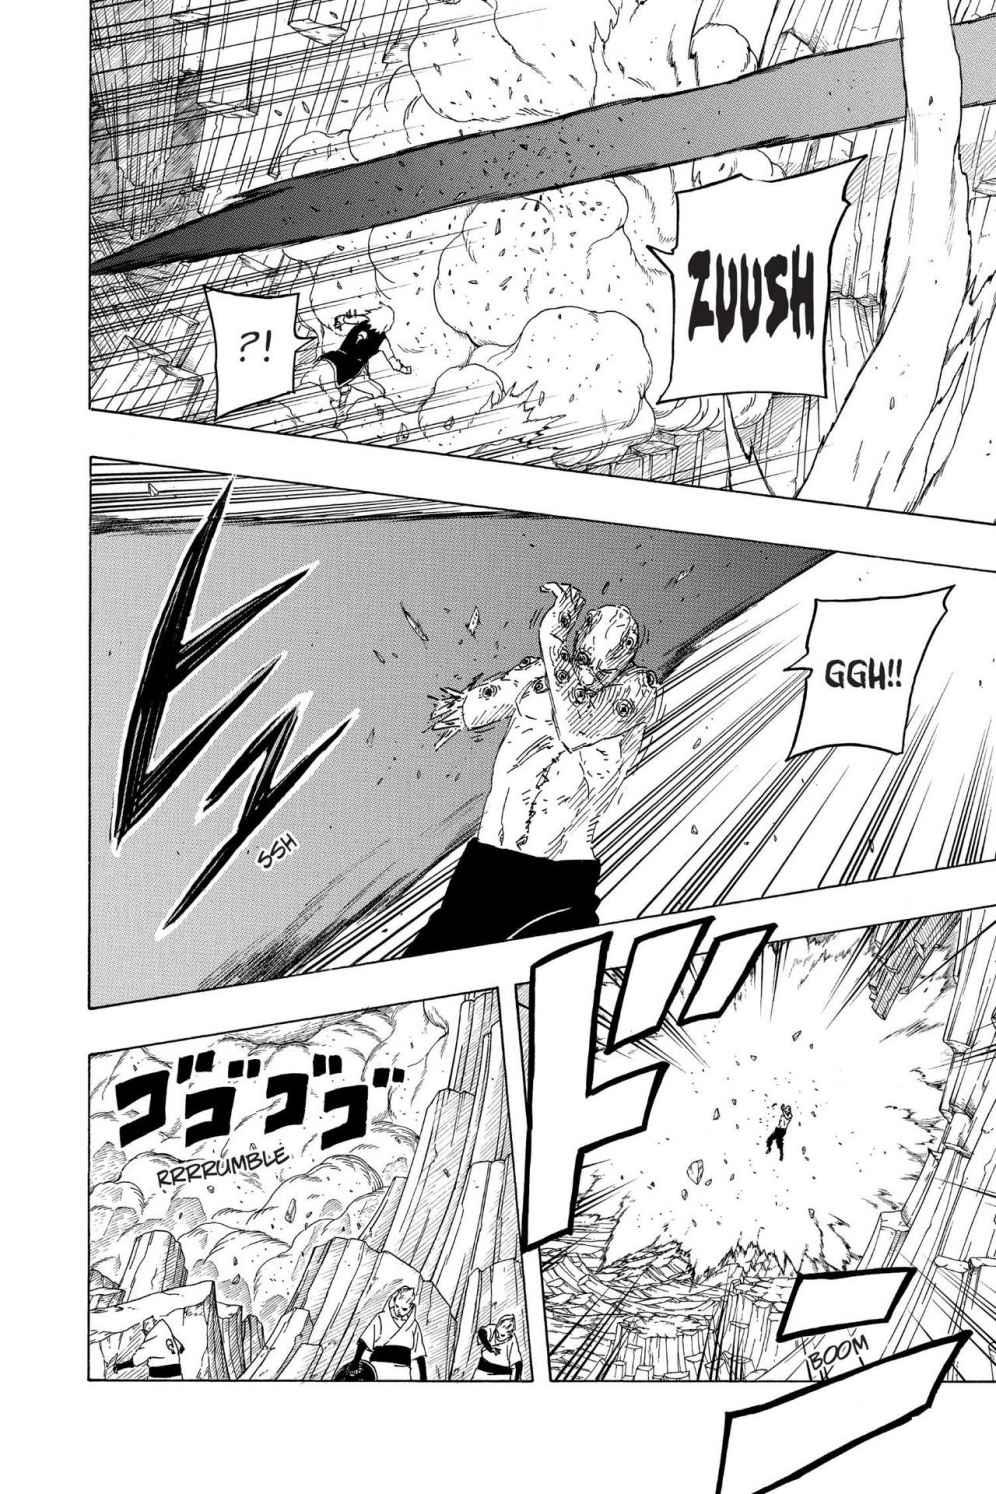 Sasuke MS vs Sakura adulta. - Página 5 0009-006